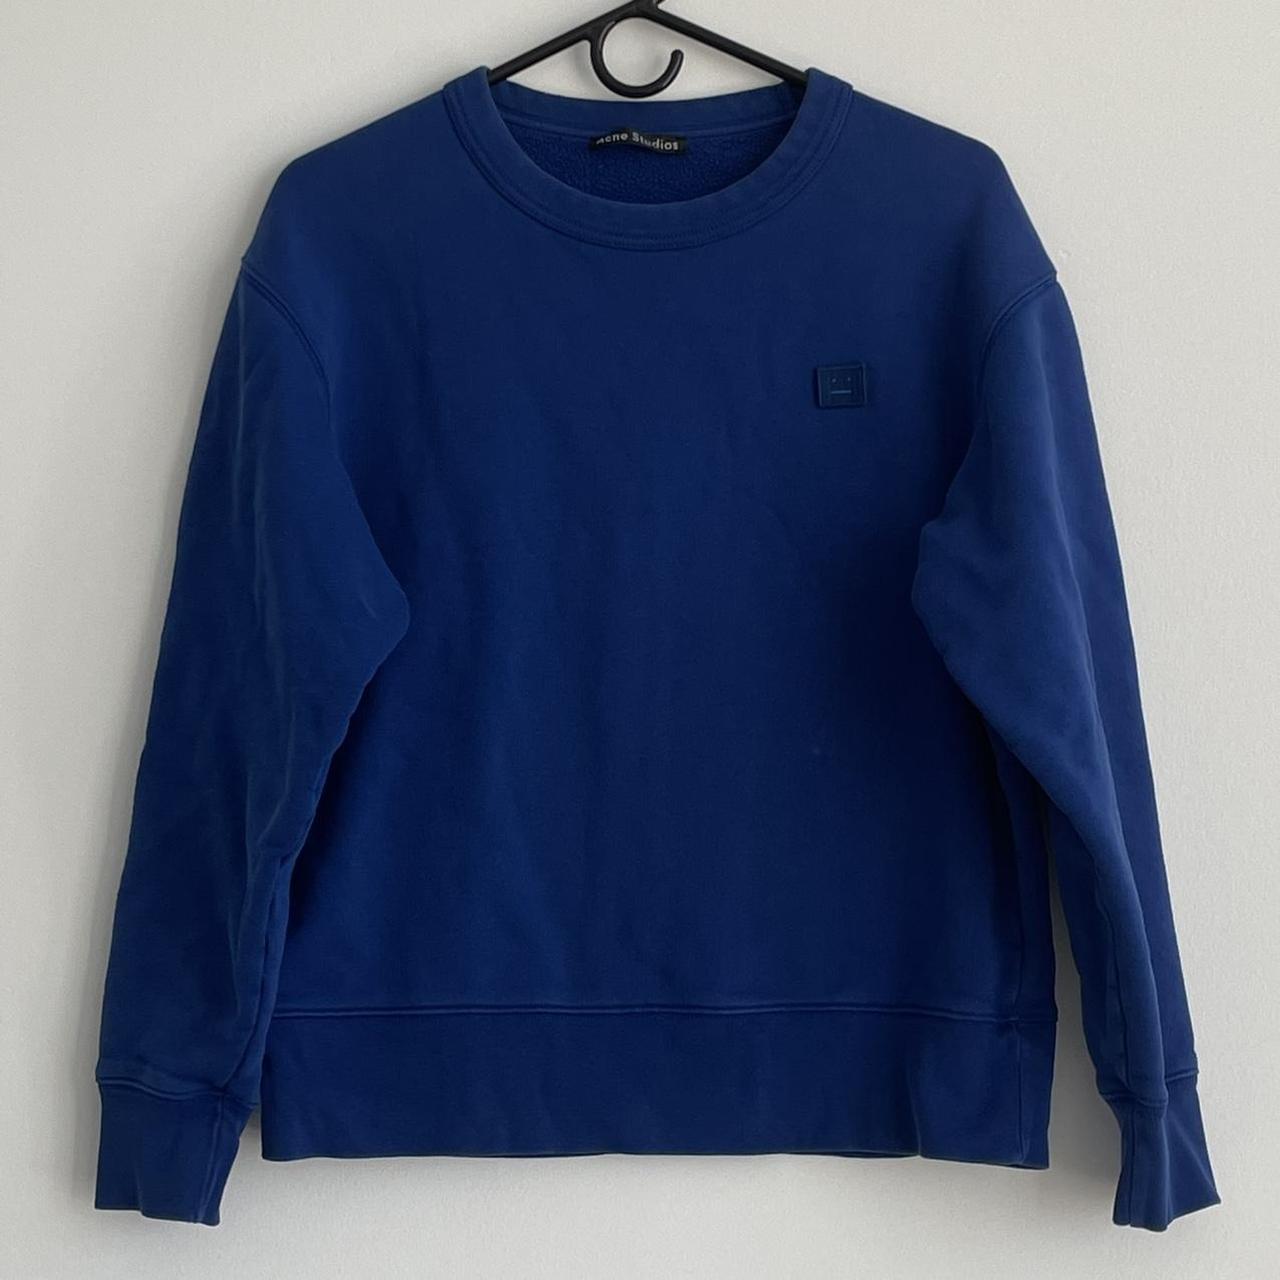 Acne Studios Women's Blue Sweatshirt